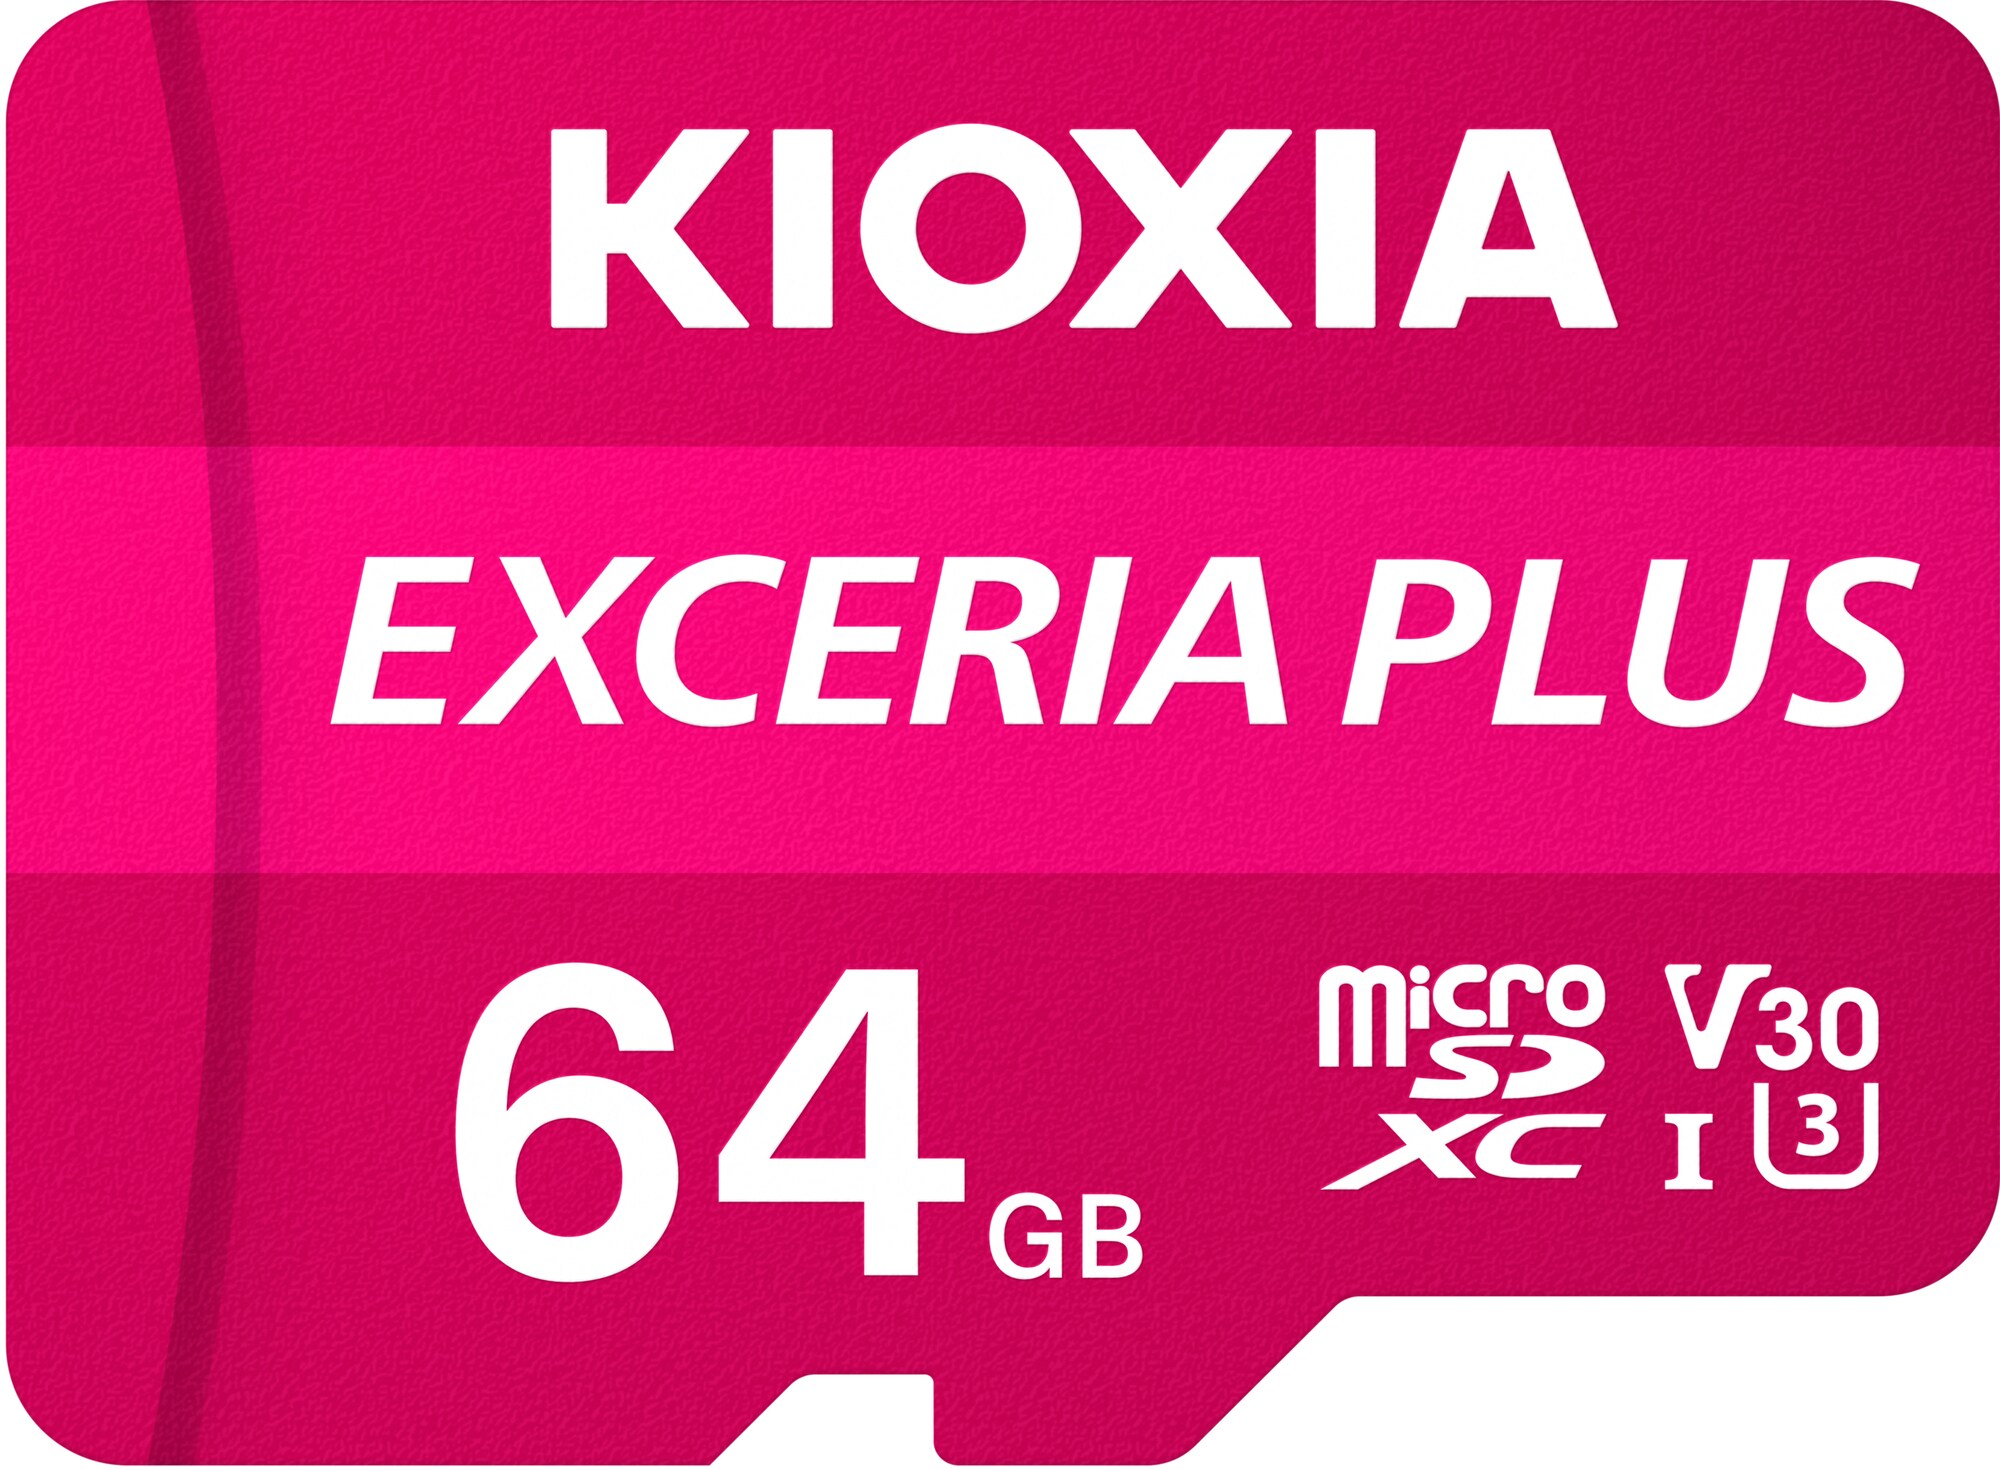 Kioxia Exceria Plus 64 GB muistikortti - Gigantti verkkokauppa